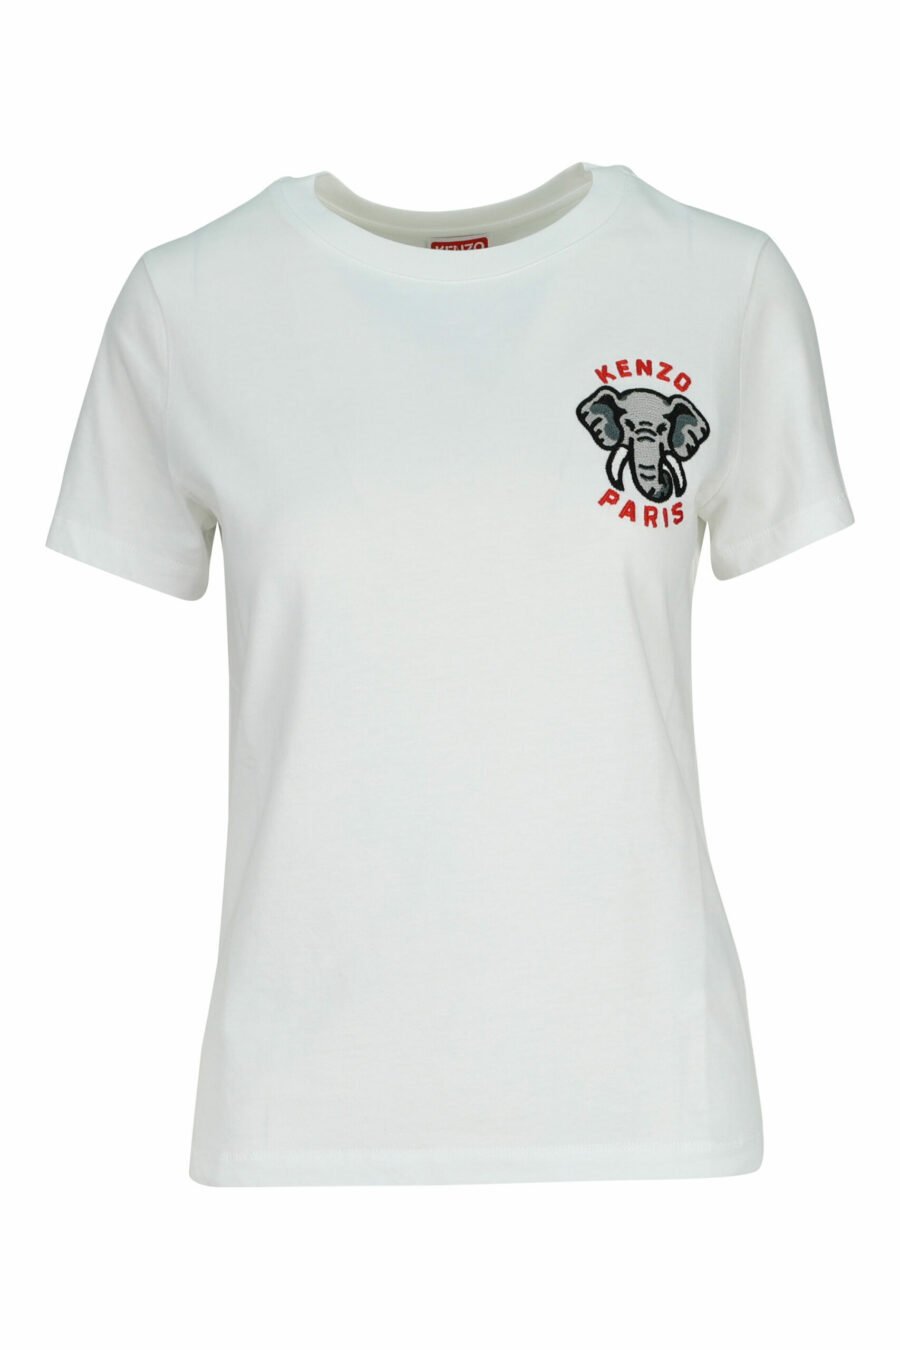 Camiseta blanca con minilogo "kenzo elephant" - 3612230620117 2 scaled